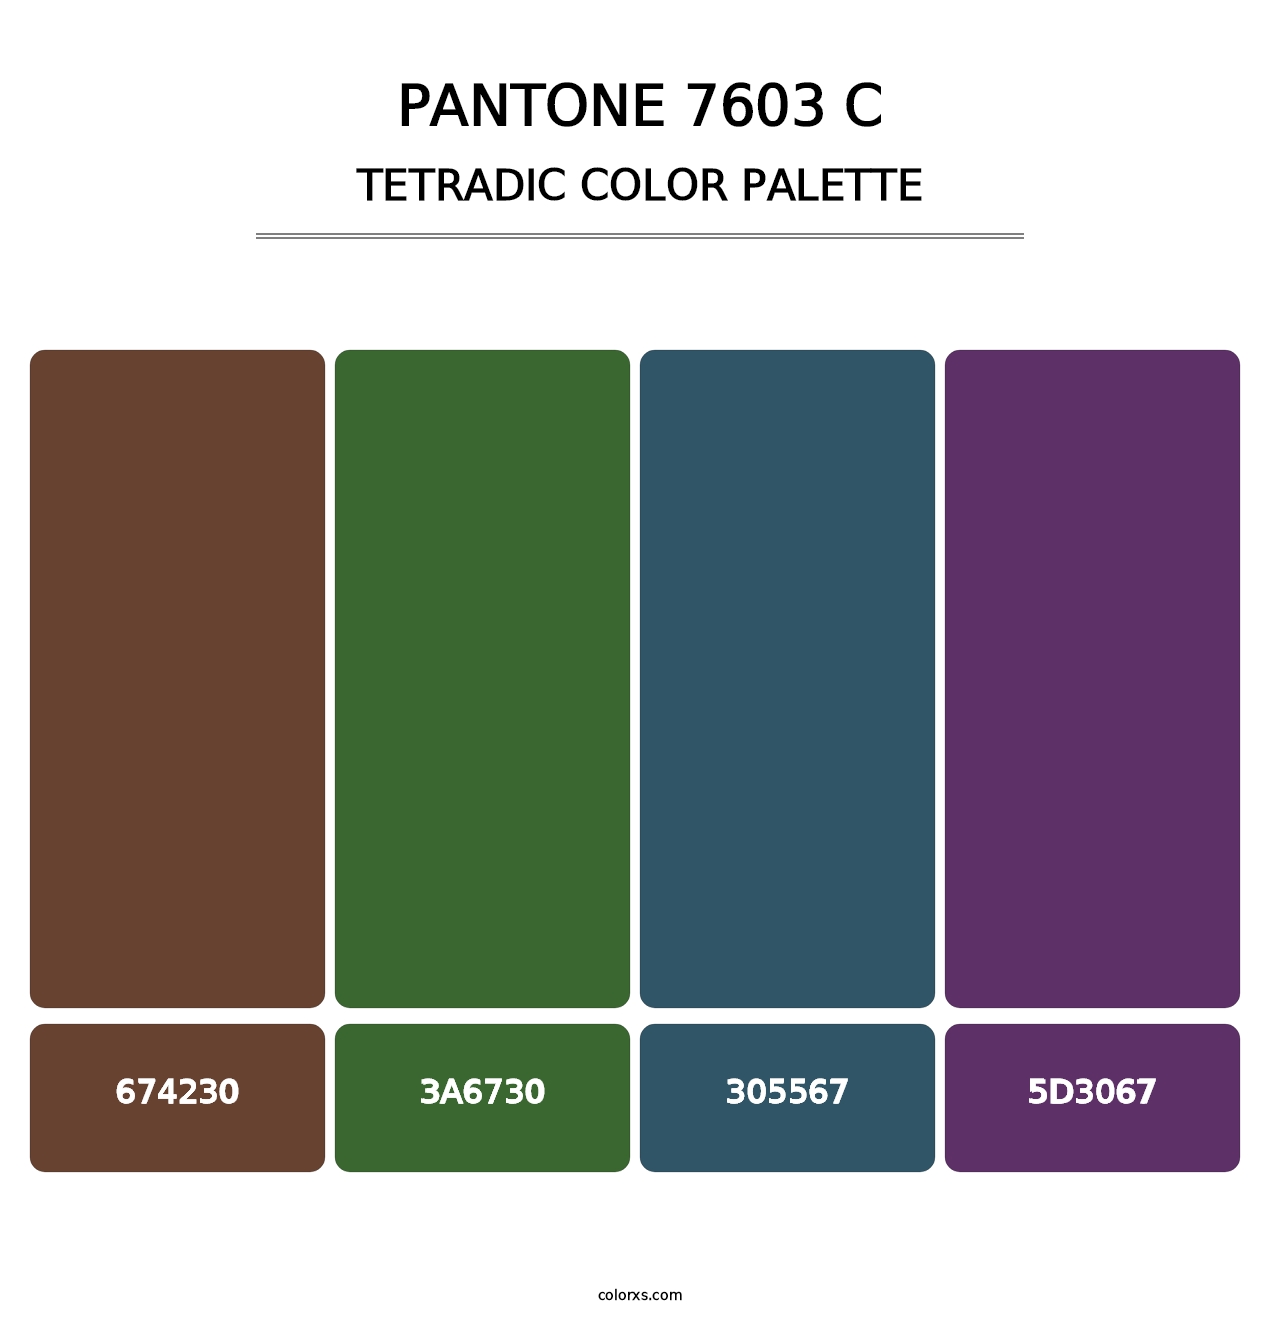 PANTONE 7603 C - Tetradic Color Palette